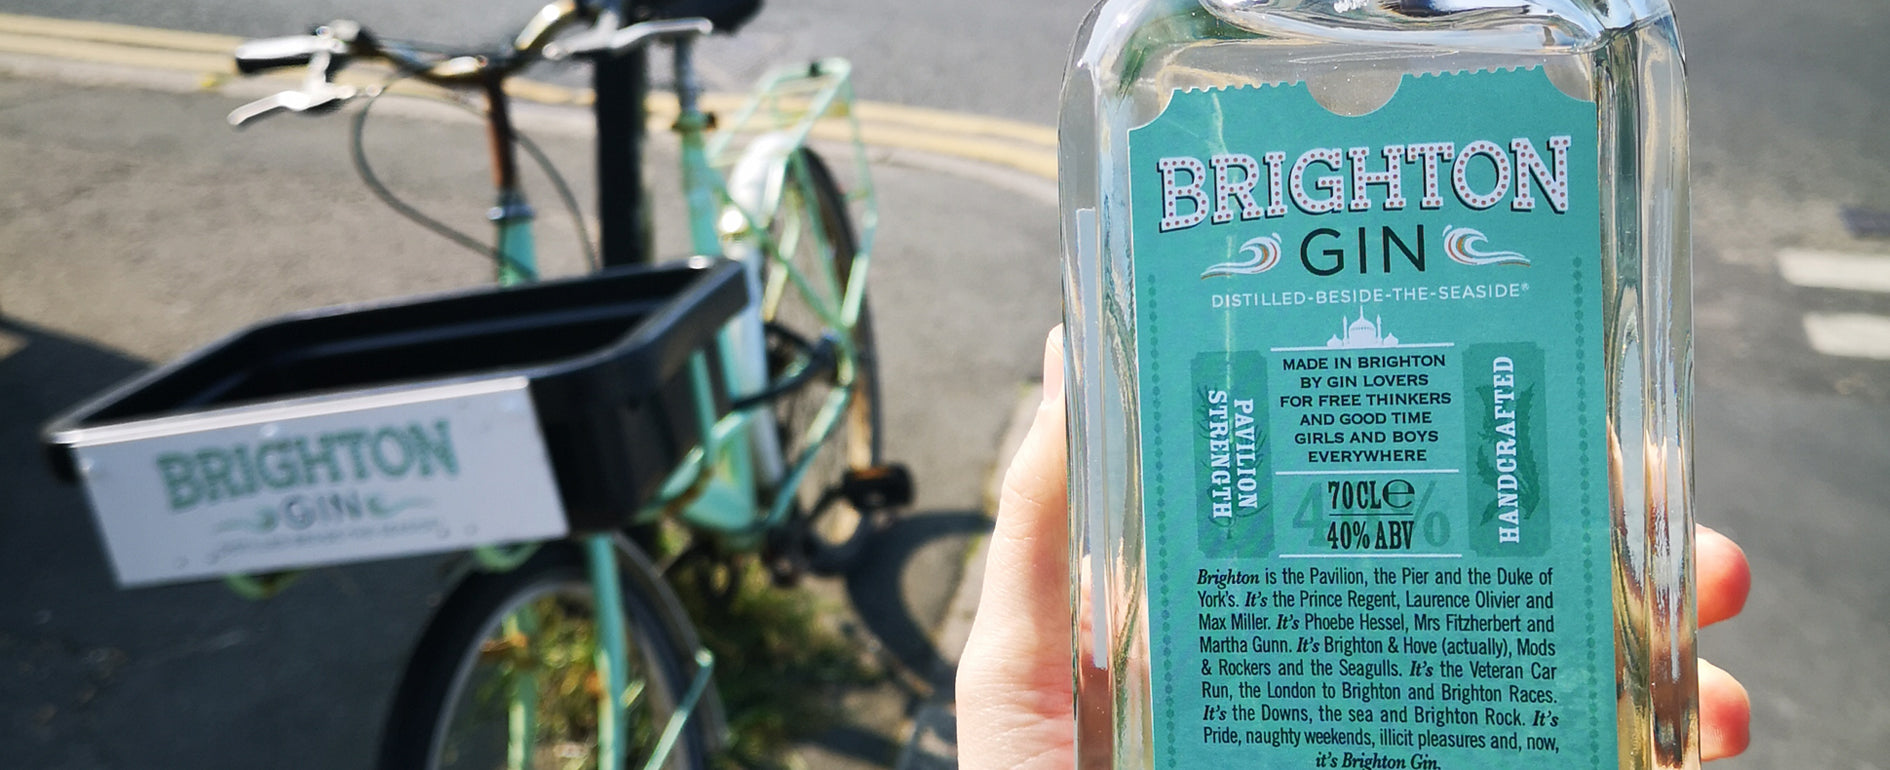 Local Deliveries by Brighton Gin bike!